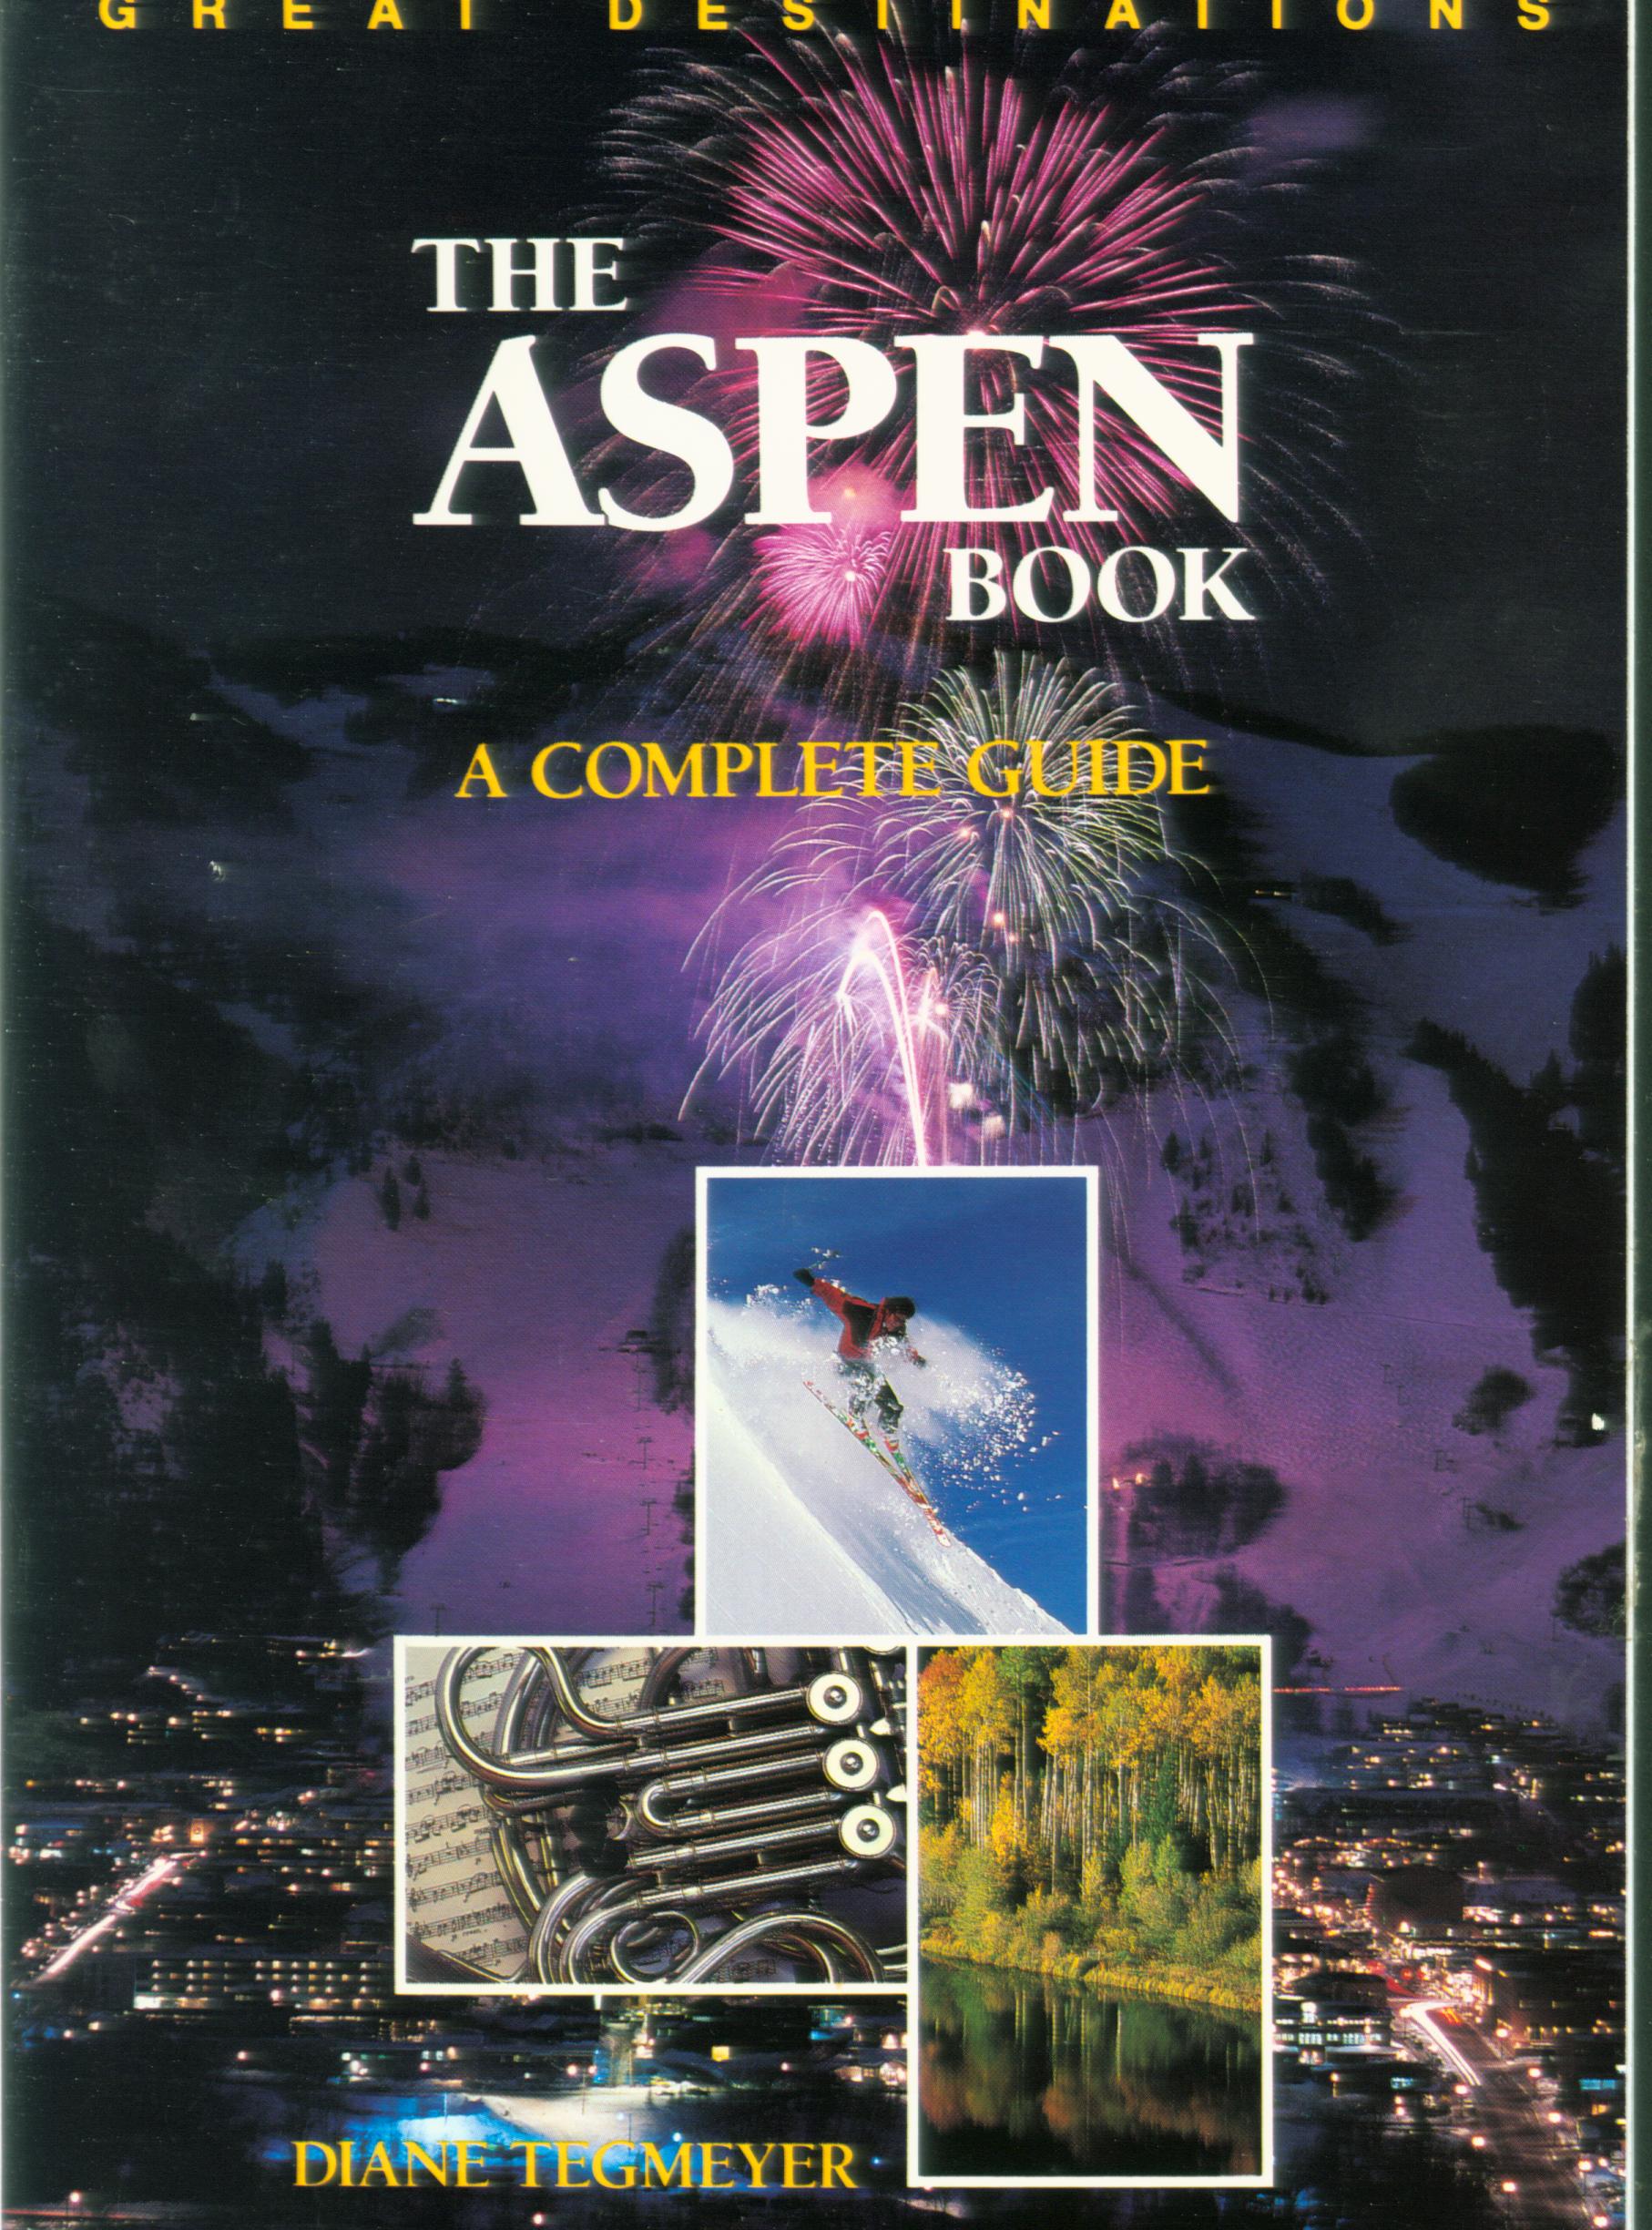 THE ASPEN BOOK: a complete guide. 